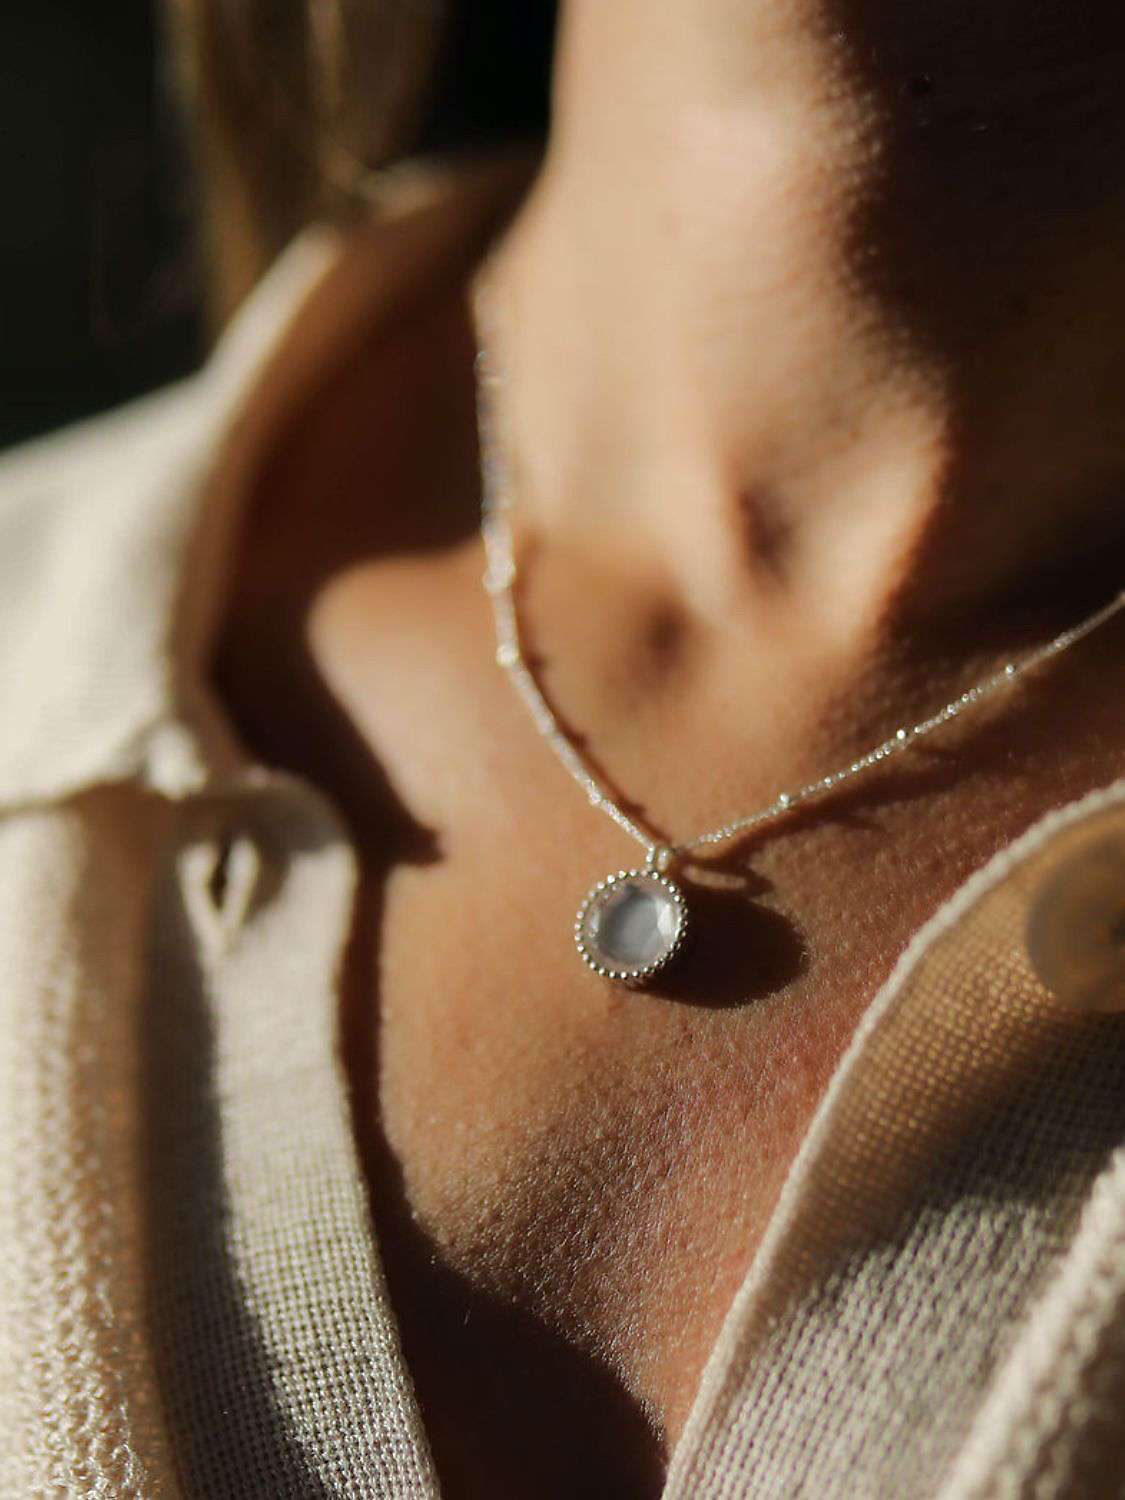 Buy Auree Barcelona Personalised Birthstone Sterling Silver Beaded Pendant Necklace Online at johnlewis.com